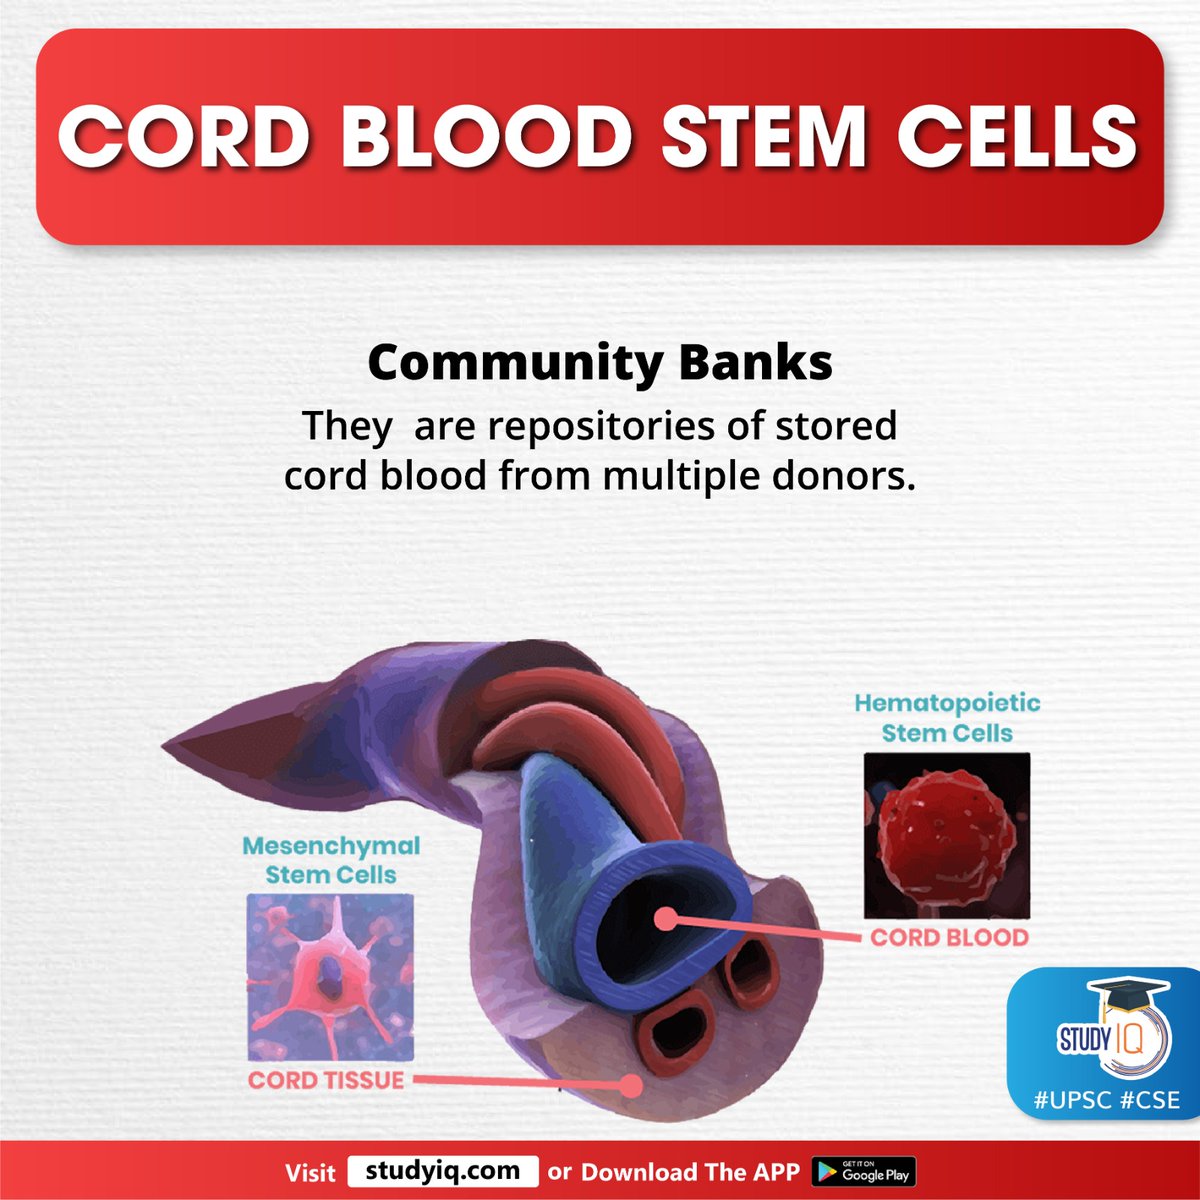 Cord Blood Stem Cells

#cordbloodstemcells #bloodbanking #biologicalisurance #medicine #hypothetical #umbilicalcord #oxygen #typesofcells #stemcells #immunesystem #geneticdisorders #diseasedcells #hsct #donors #cordblood #upsc #cse #ips #ias